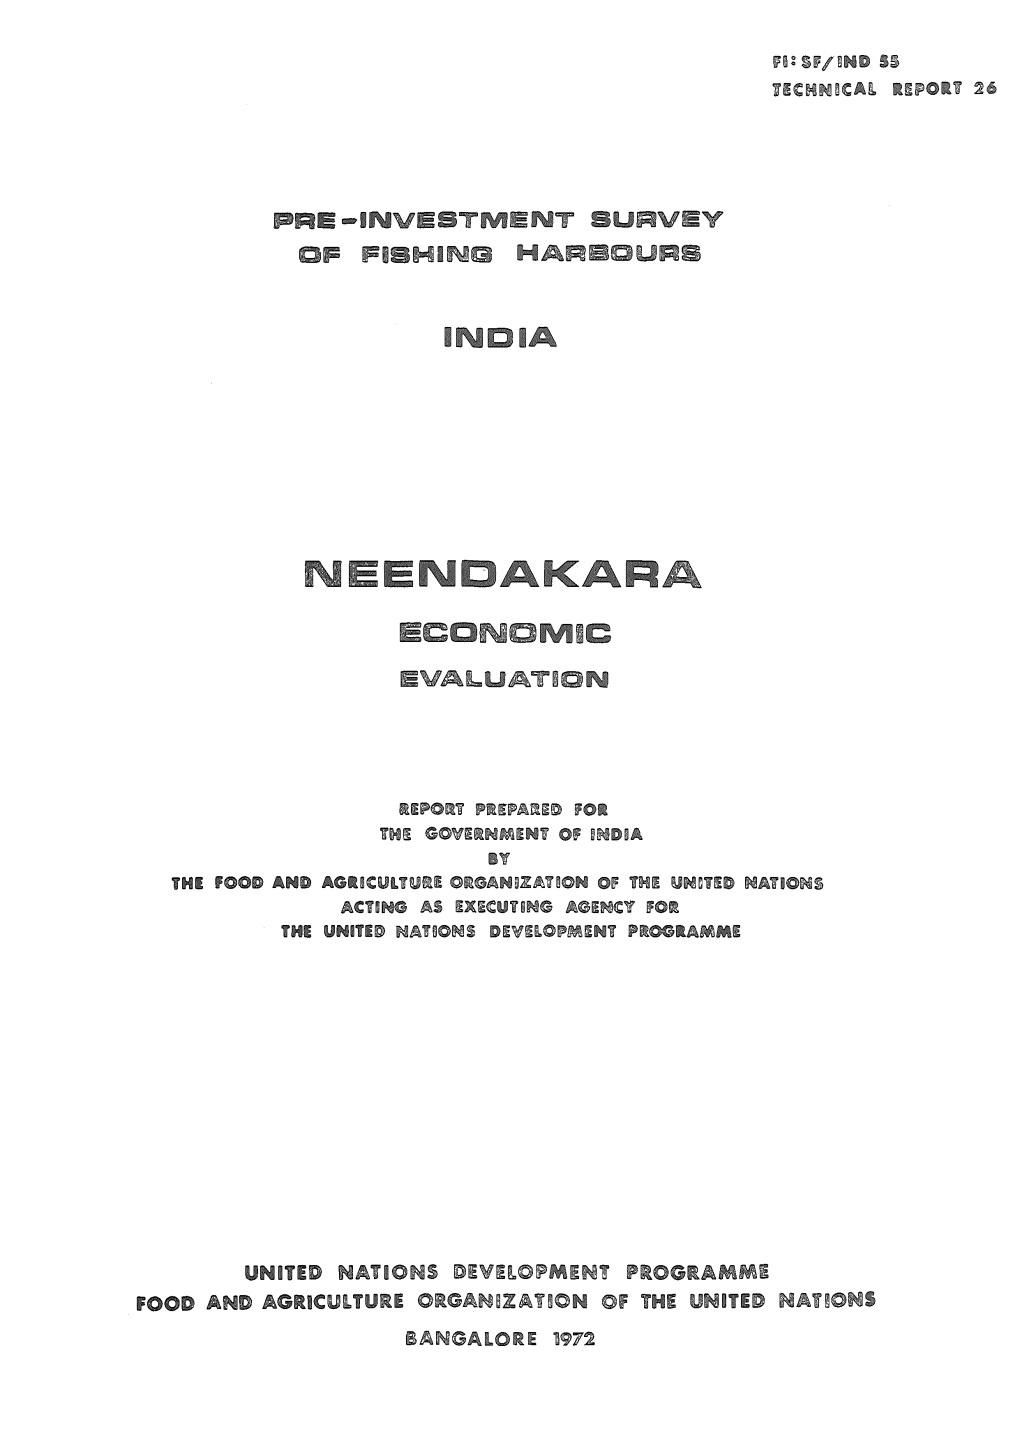 Neendakara Economic Evaluation